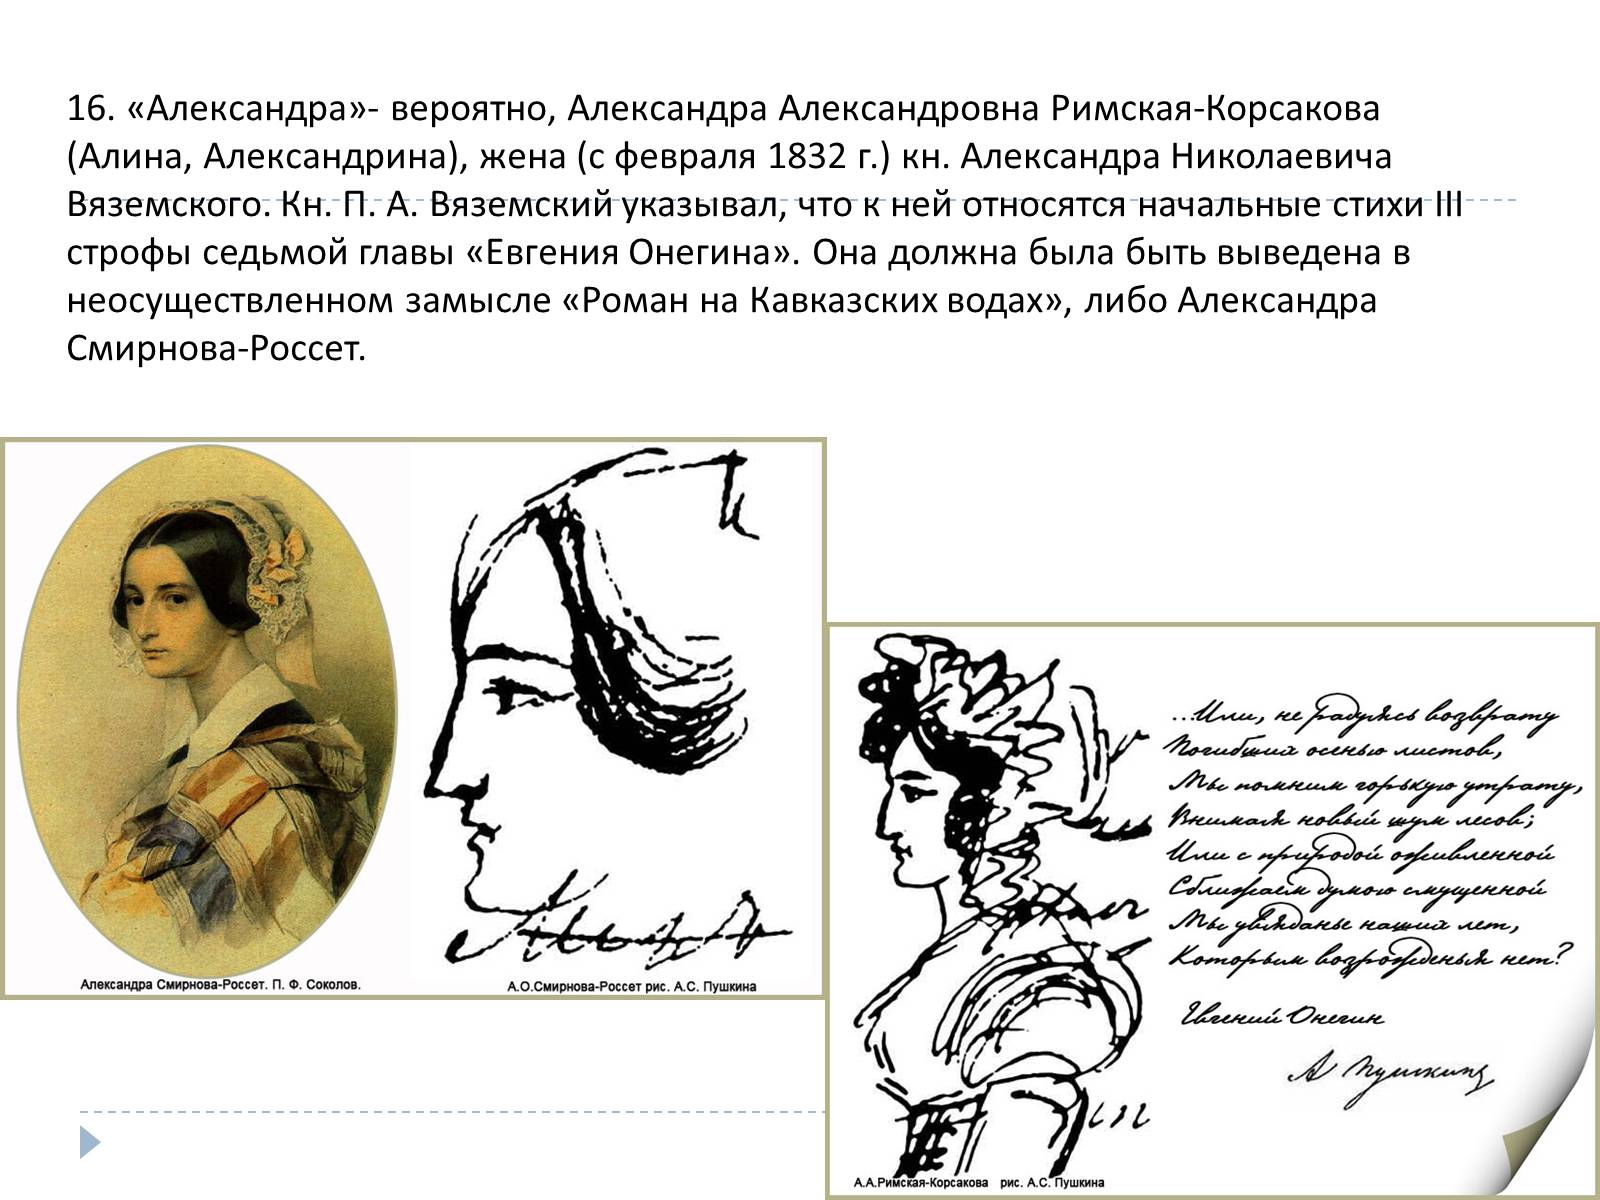 Александра Александровна Римская-Корсакова